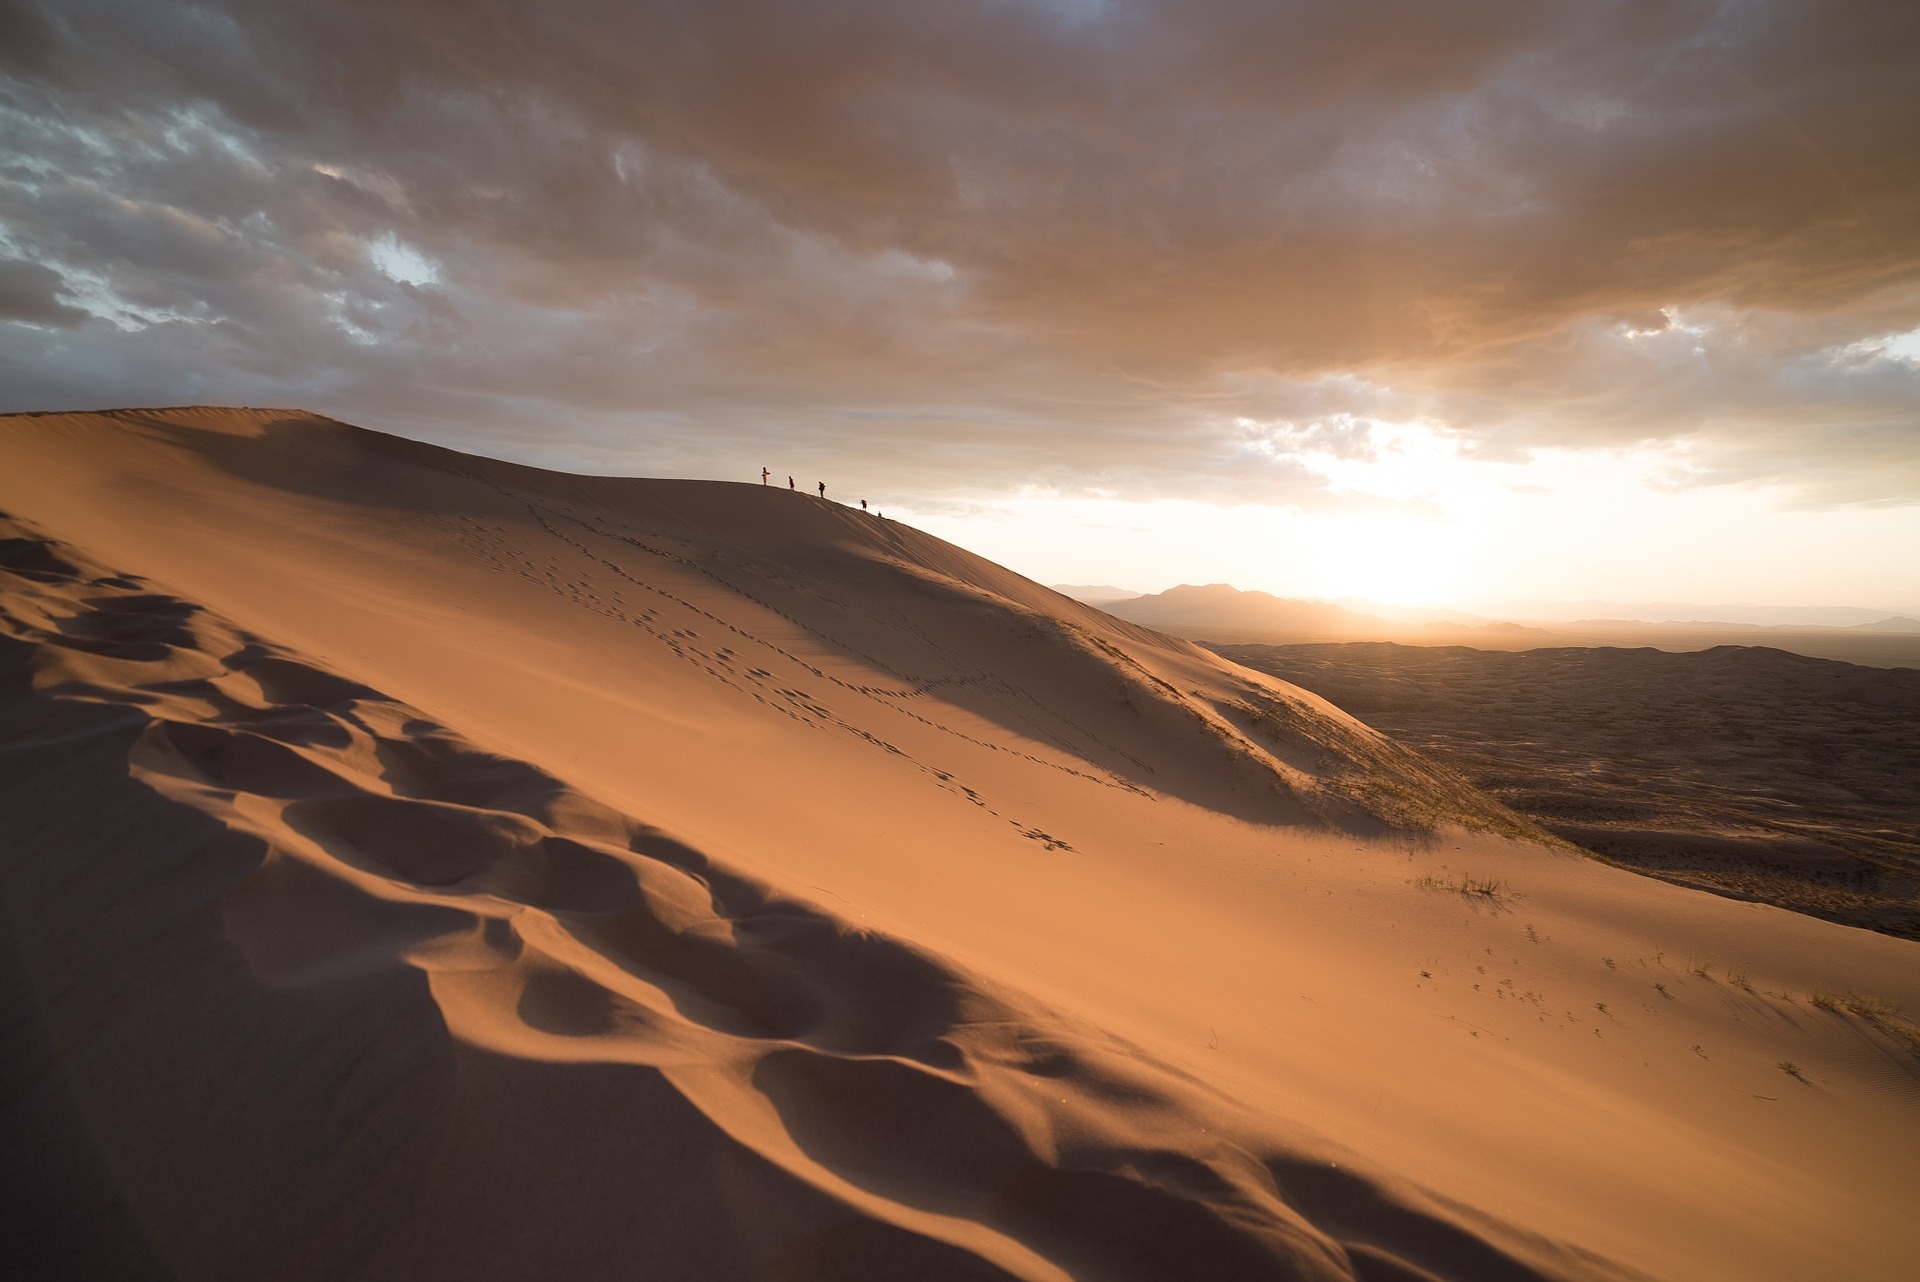 https://pixabay.com/en/sand-dunes-sand-dune-nature-1245751/